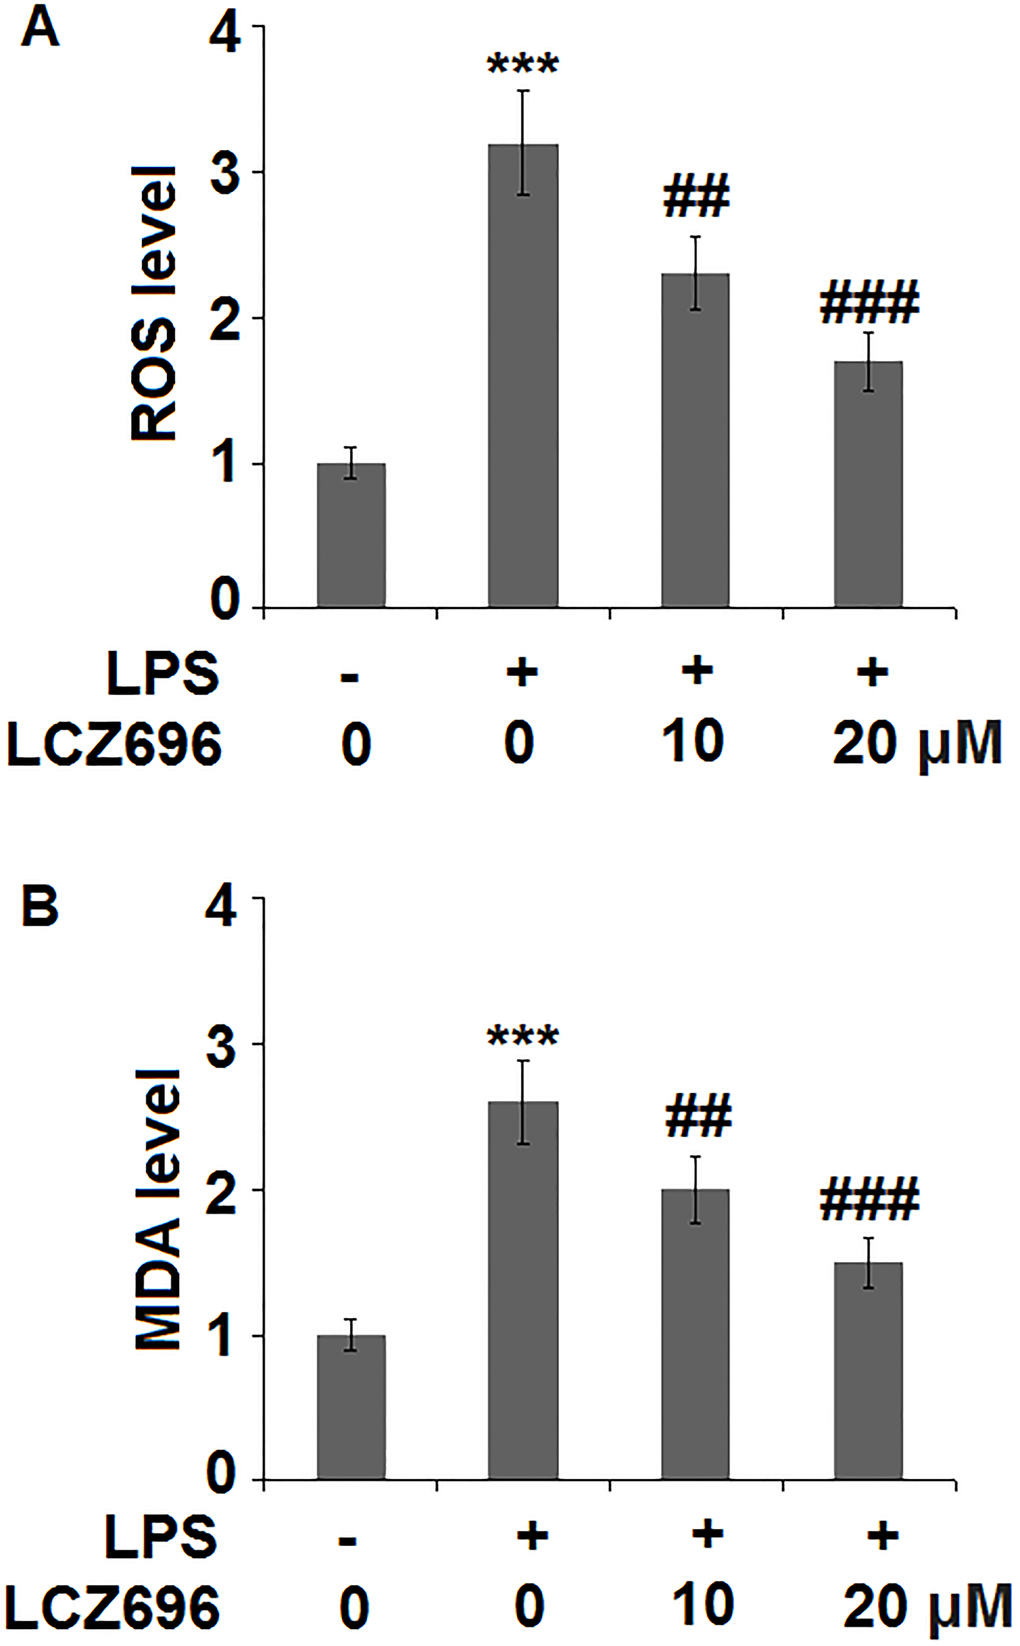 LCZ696 mitigates lipopolysaccharide (LPS)-induced oxidative stress in HUVECs